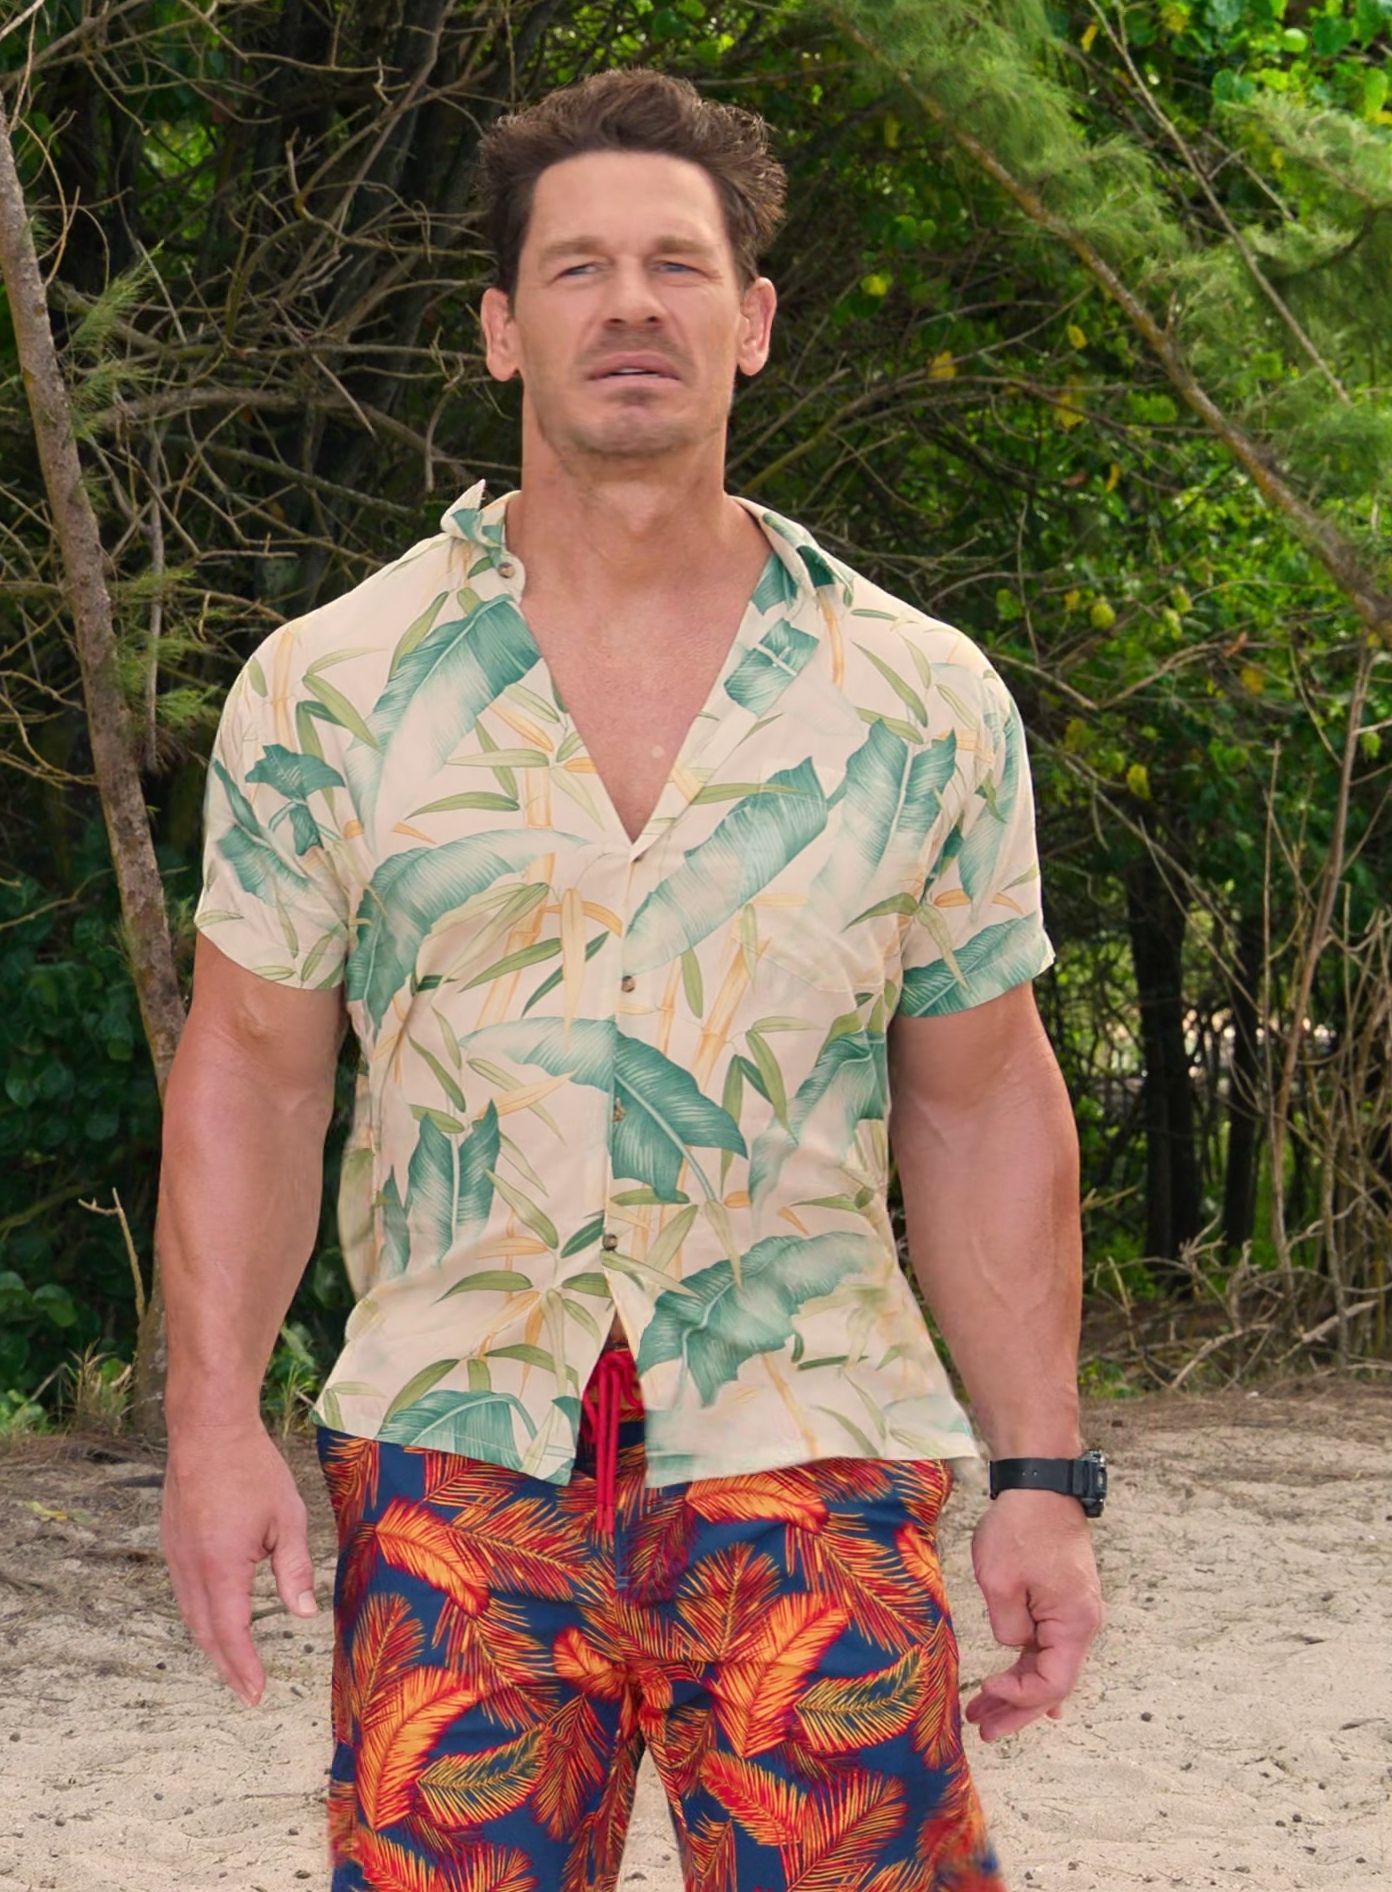 Worn on Vacation Friends 2 (2023) Movie - Banana Leaf Print Shirt of John Cena as Ron